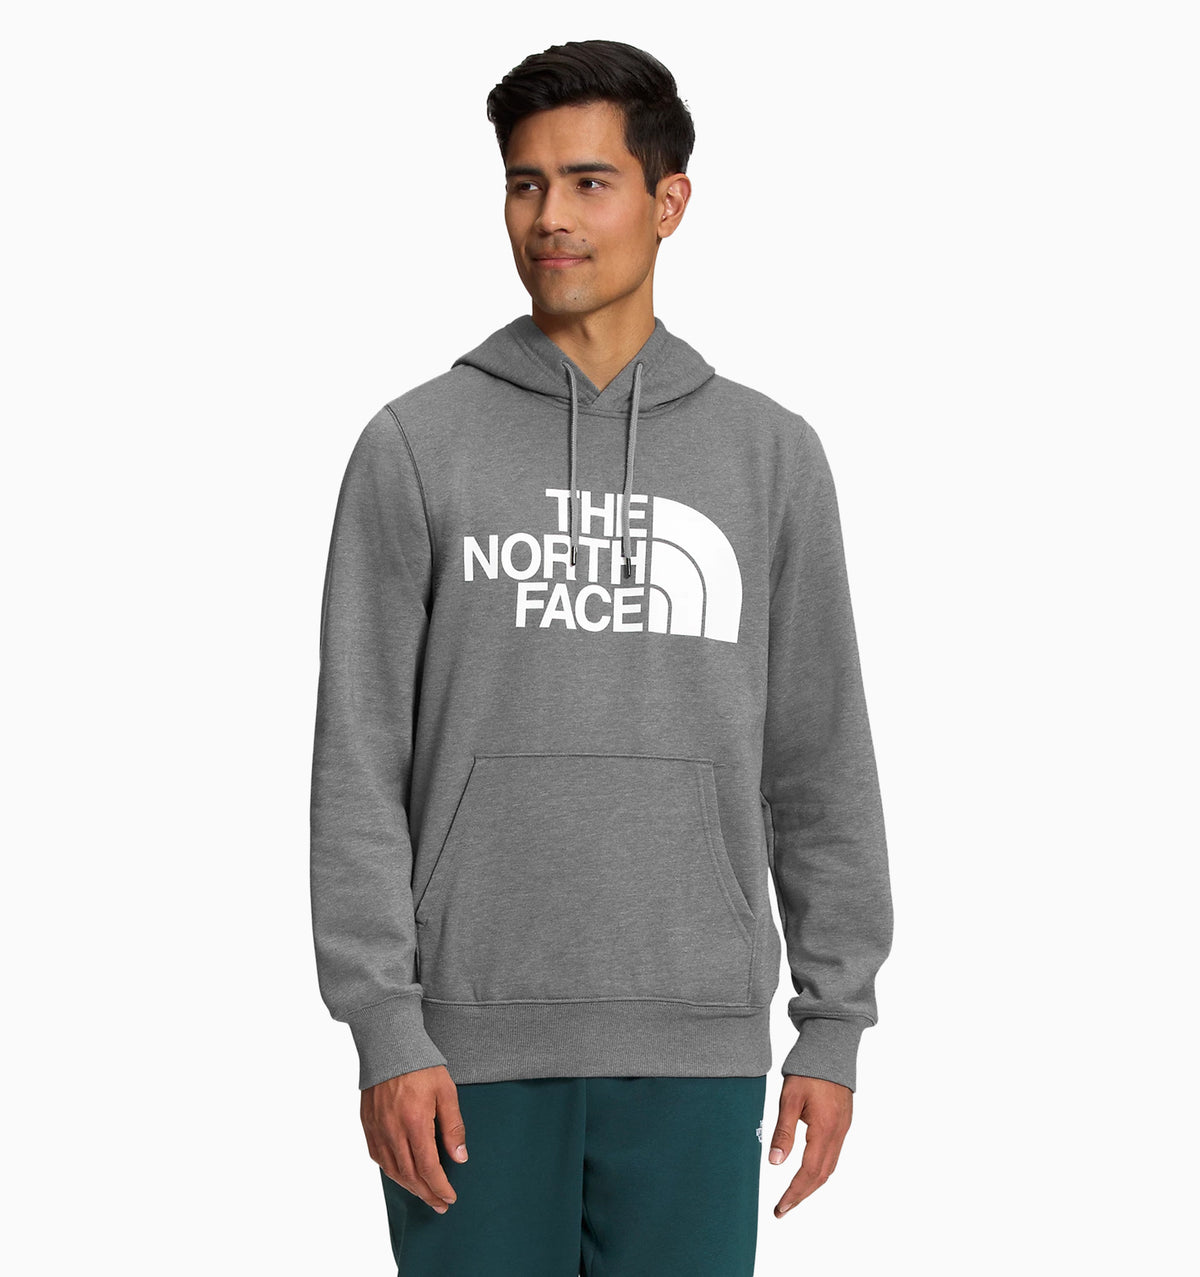 The North Face Men's Half Dome Pullover Hoodie - Medium Grey Heather